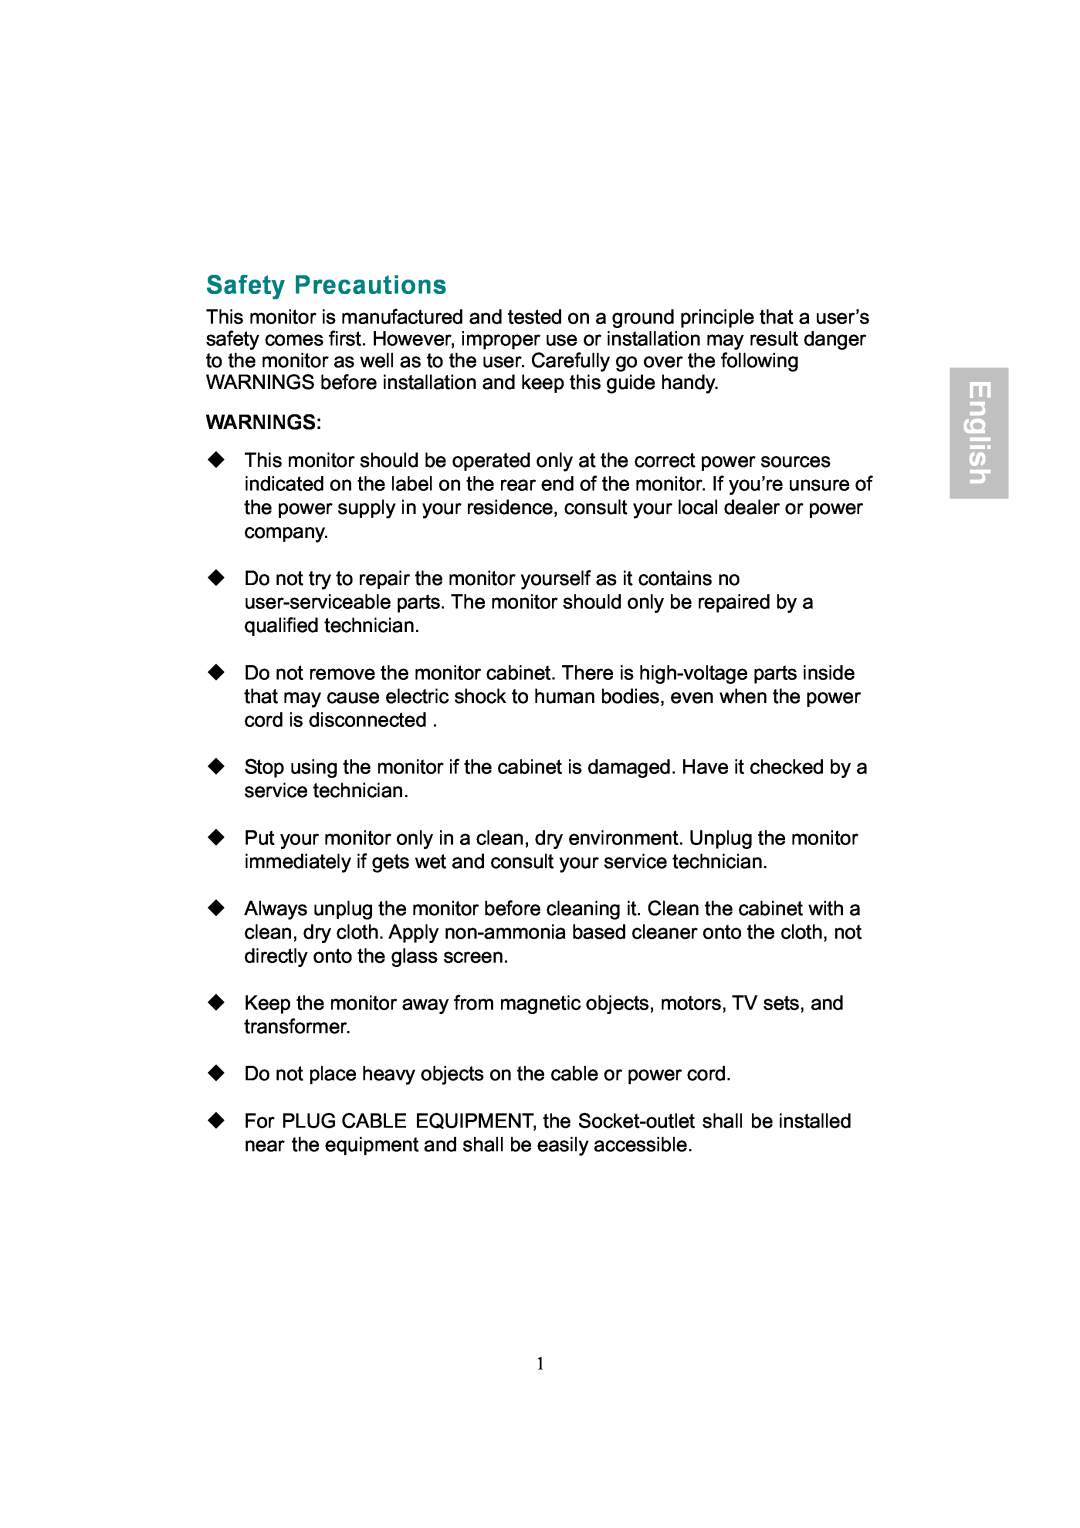 AOC 919Sw-1 manual Safety Precautions, English, Warnings 